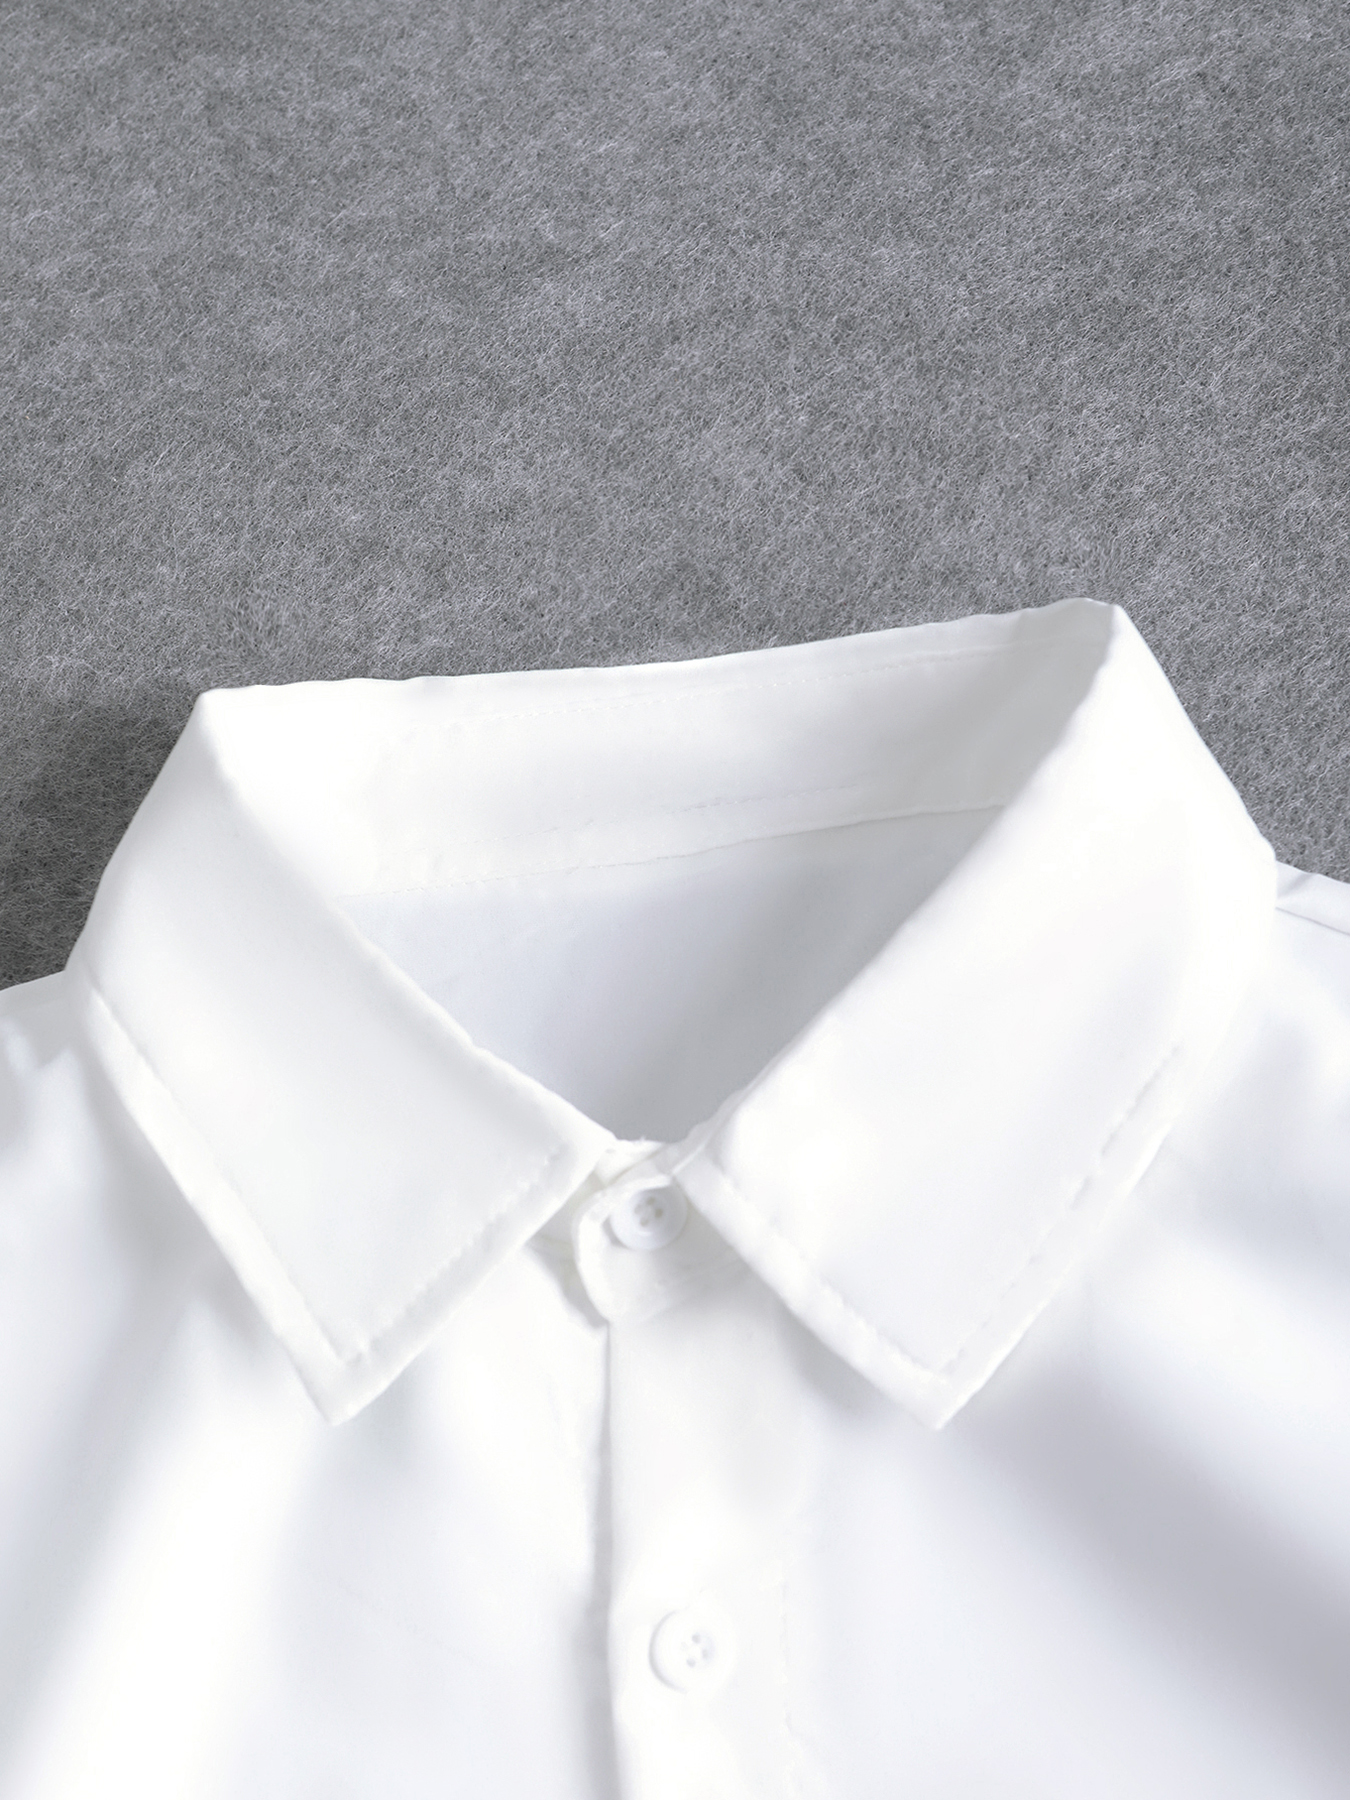 Camisas de vestir Abotonada Manga Larga Moda Para Hombres Blusa